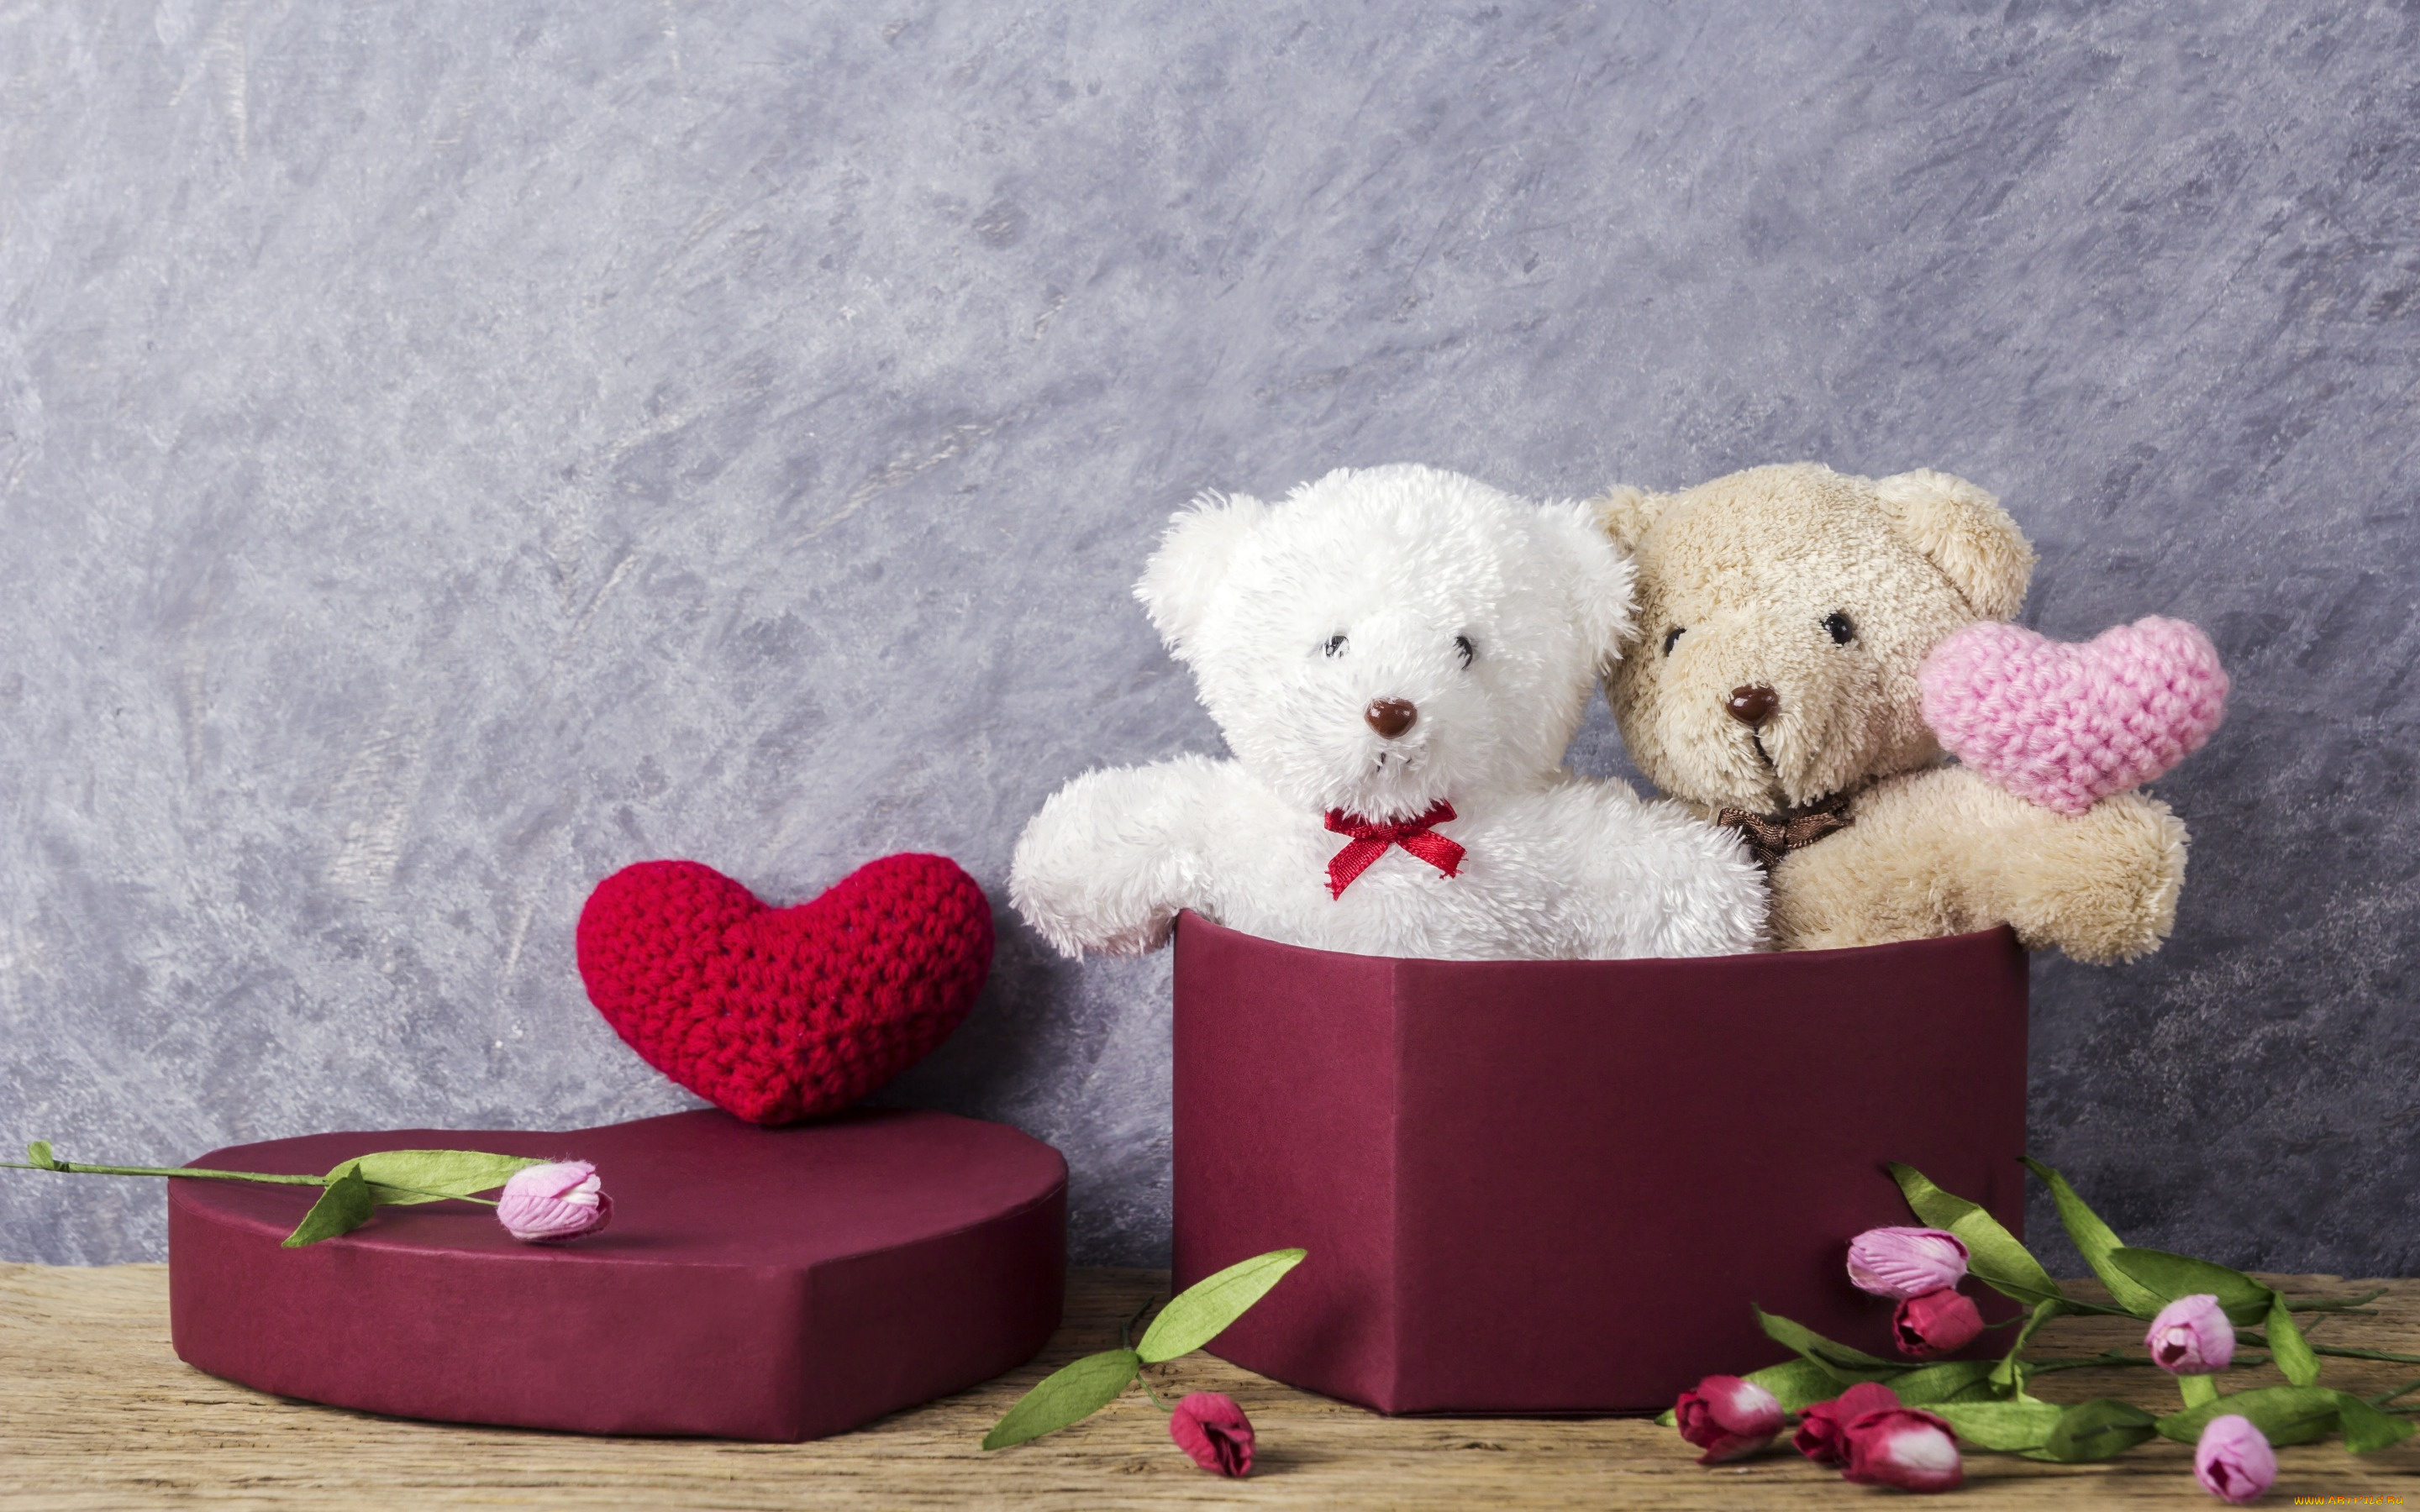 разное, игрушки, wood, love, любовь, gift, romantic, тюльпаны, cute, мишка, розовые, heart, цветы, сердце, pink, игрушка, tulips, bear, valentine's, day, flowers, подарок, teddy